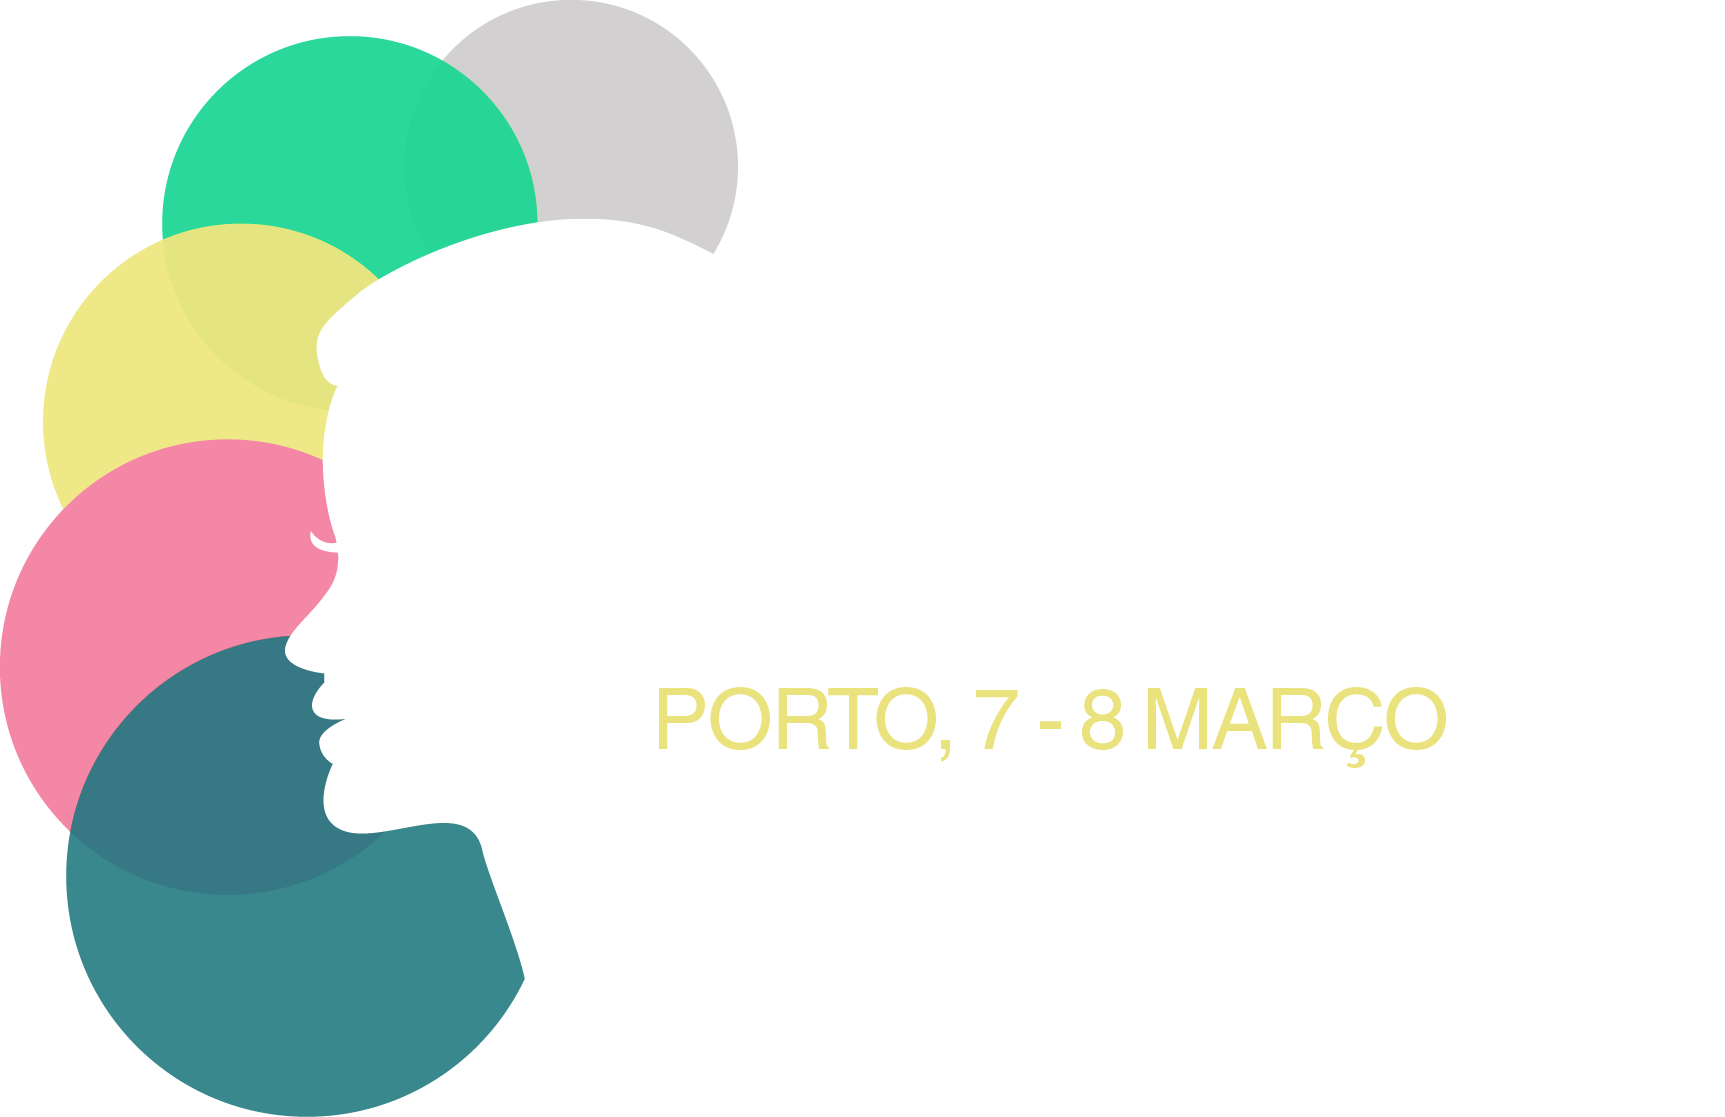 Women Summit 2017 - Porto, 7-8 Março